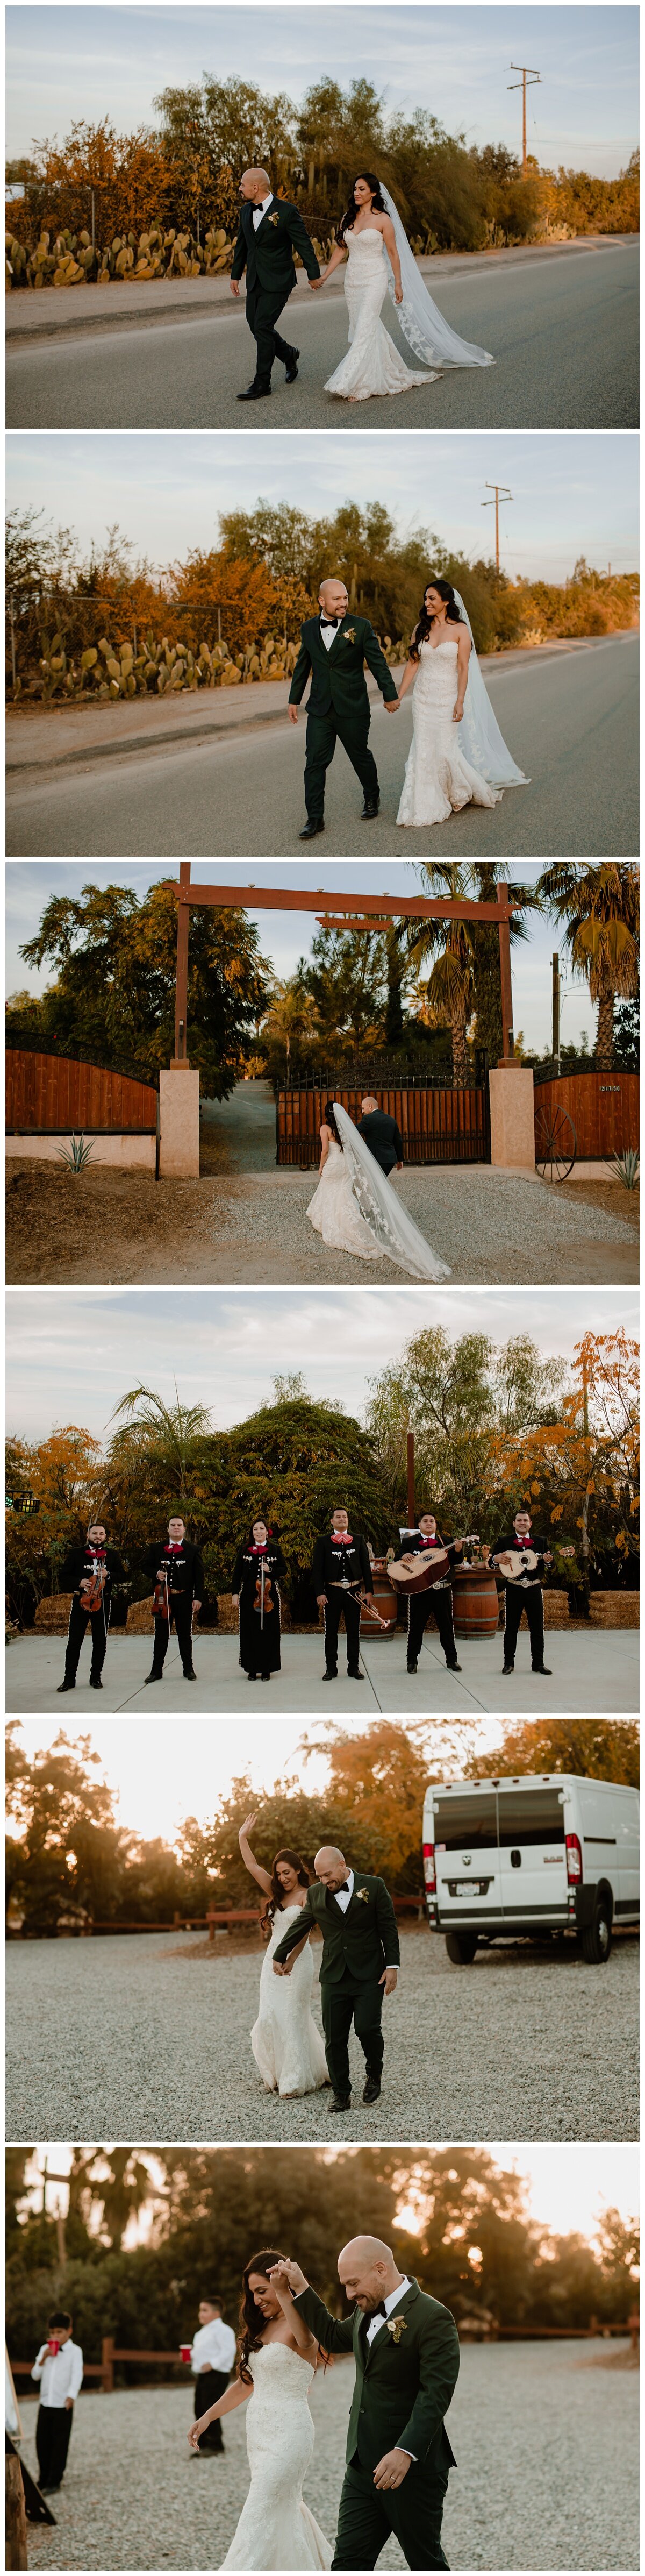 Erika and Tony - Lake Perris, CA Rustic Wedding - Eve Rox Photography-761_WEB.jpg